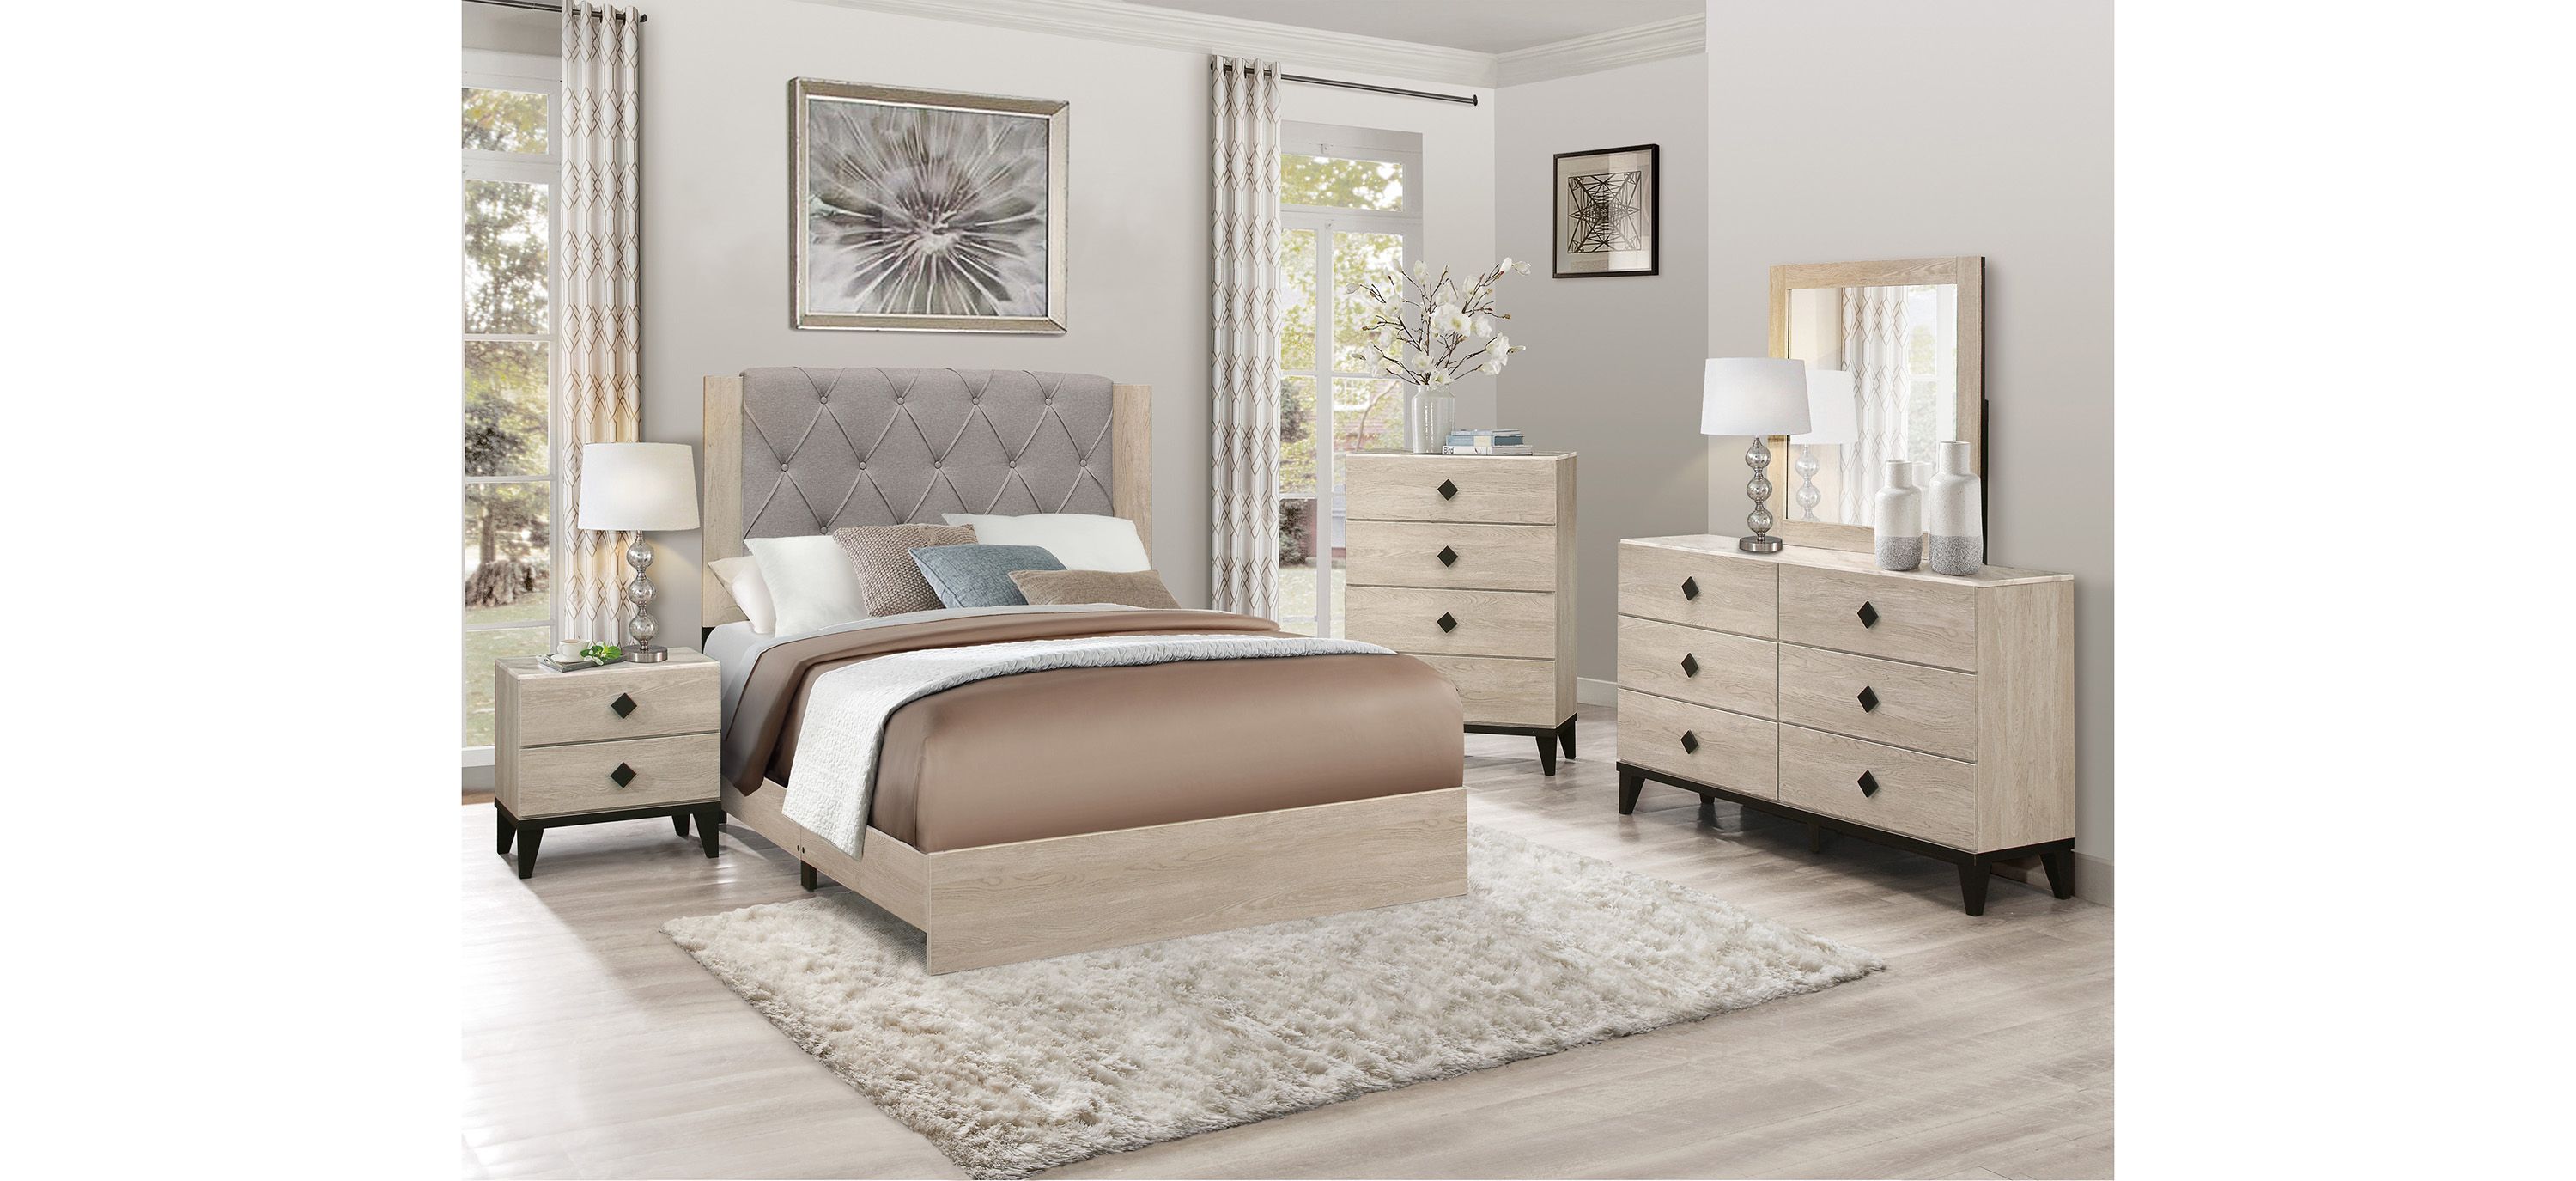 Karren 5-pc. Upholstered Panel Bedroom Set